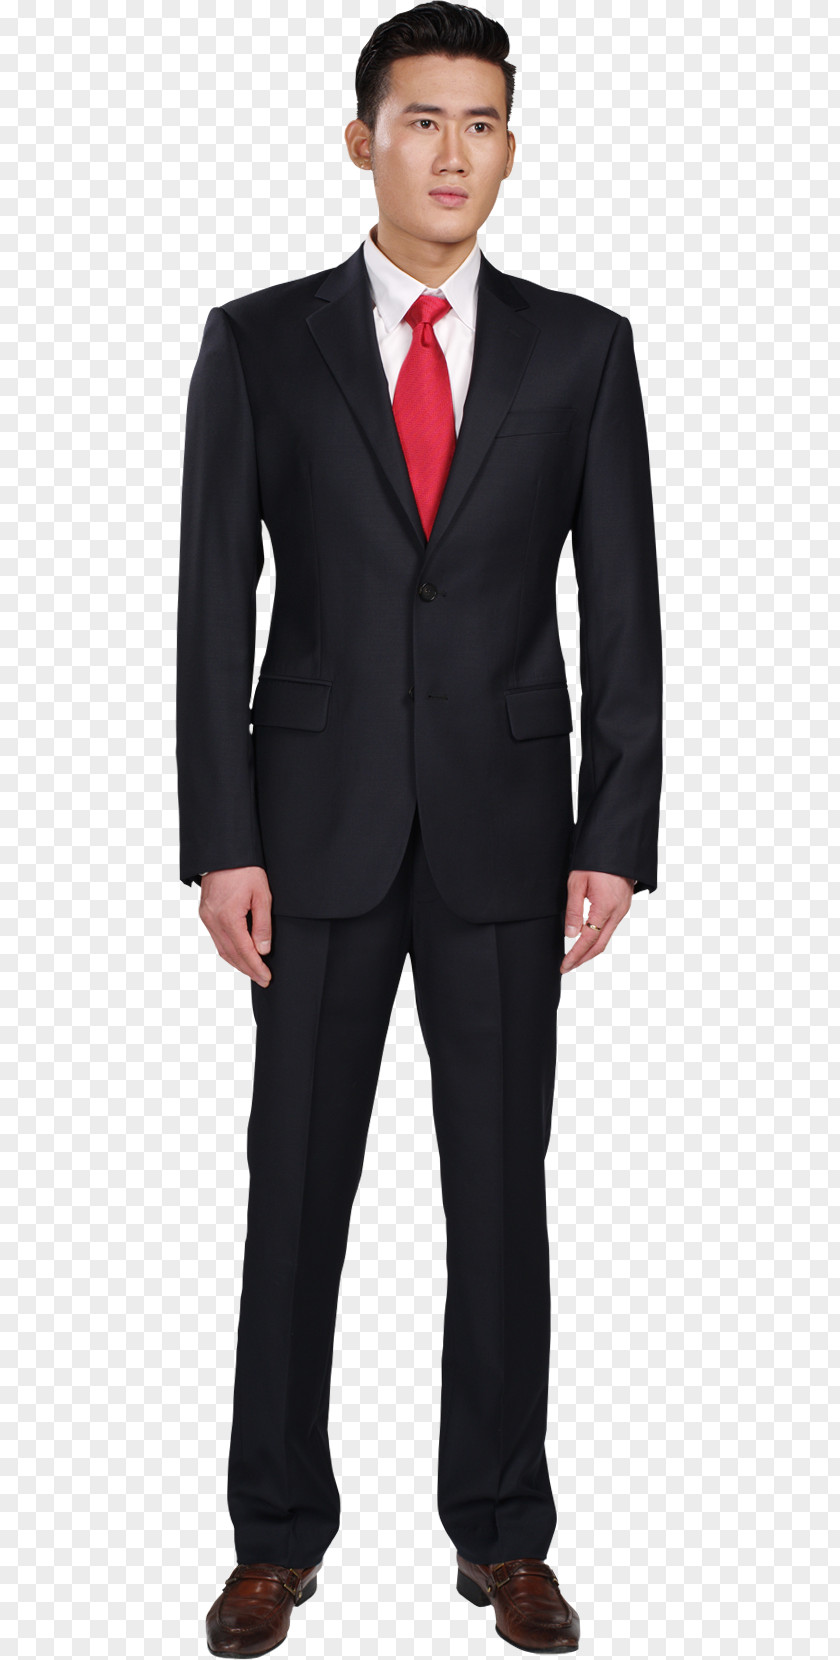 Suit Jacket Coloring Pin Stripes Clothing Sport Coat Blazer PNG